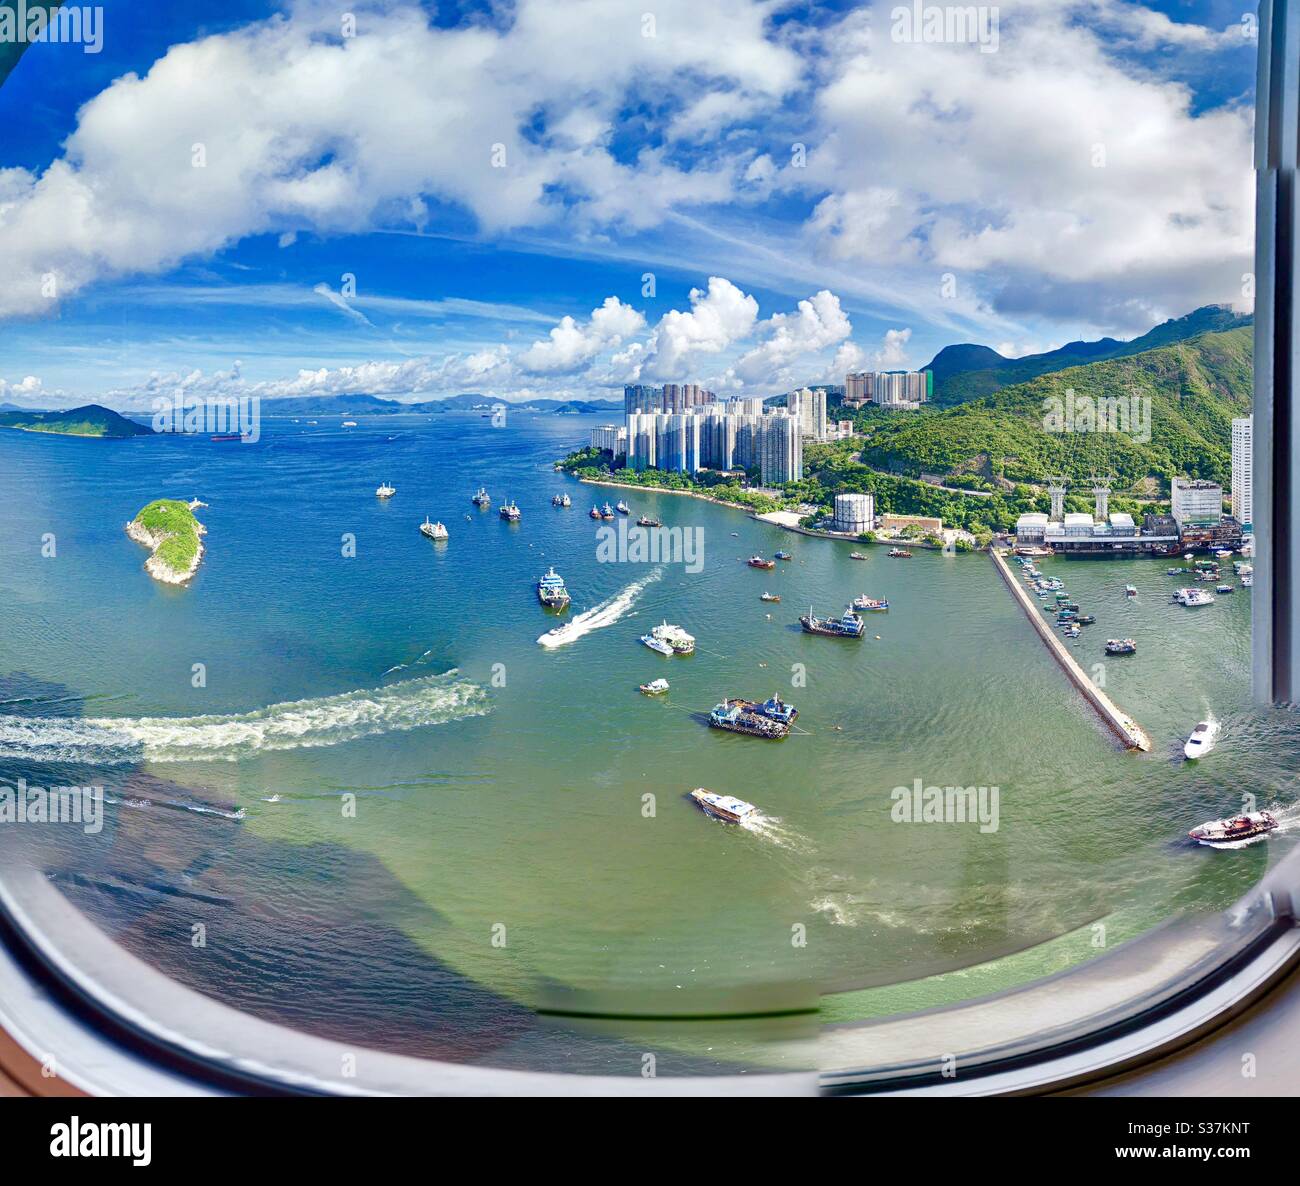 A beautiful view of Keller bay and waterfall bay along with ocean views in Hong Kong. Stock Photo